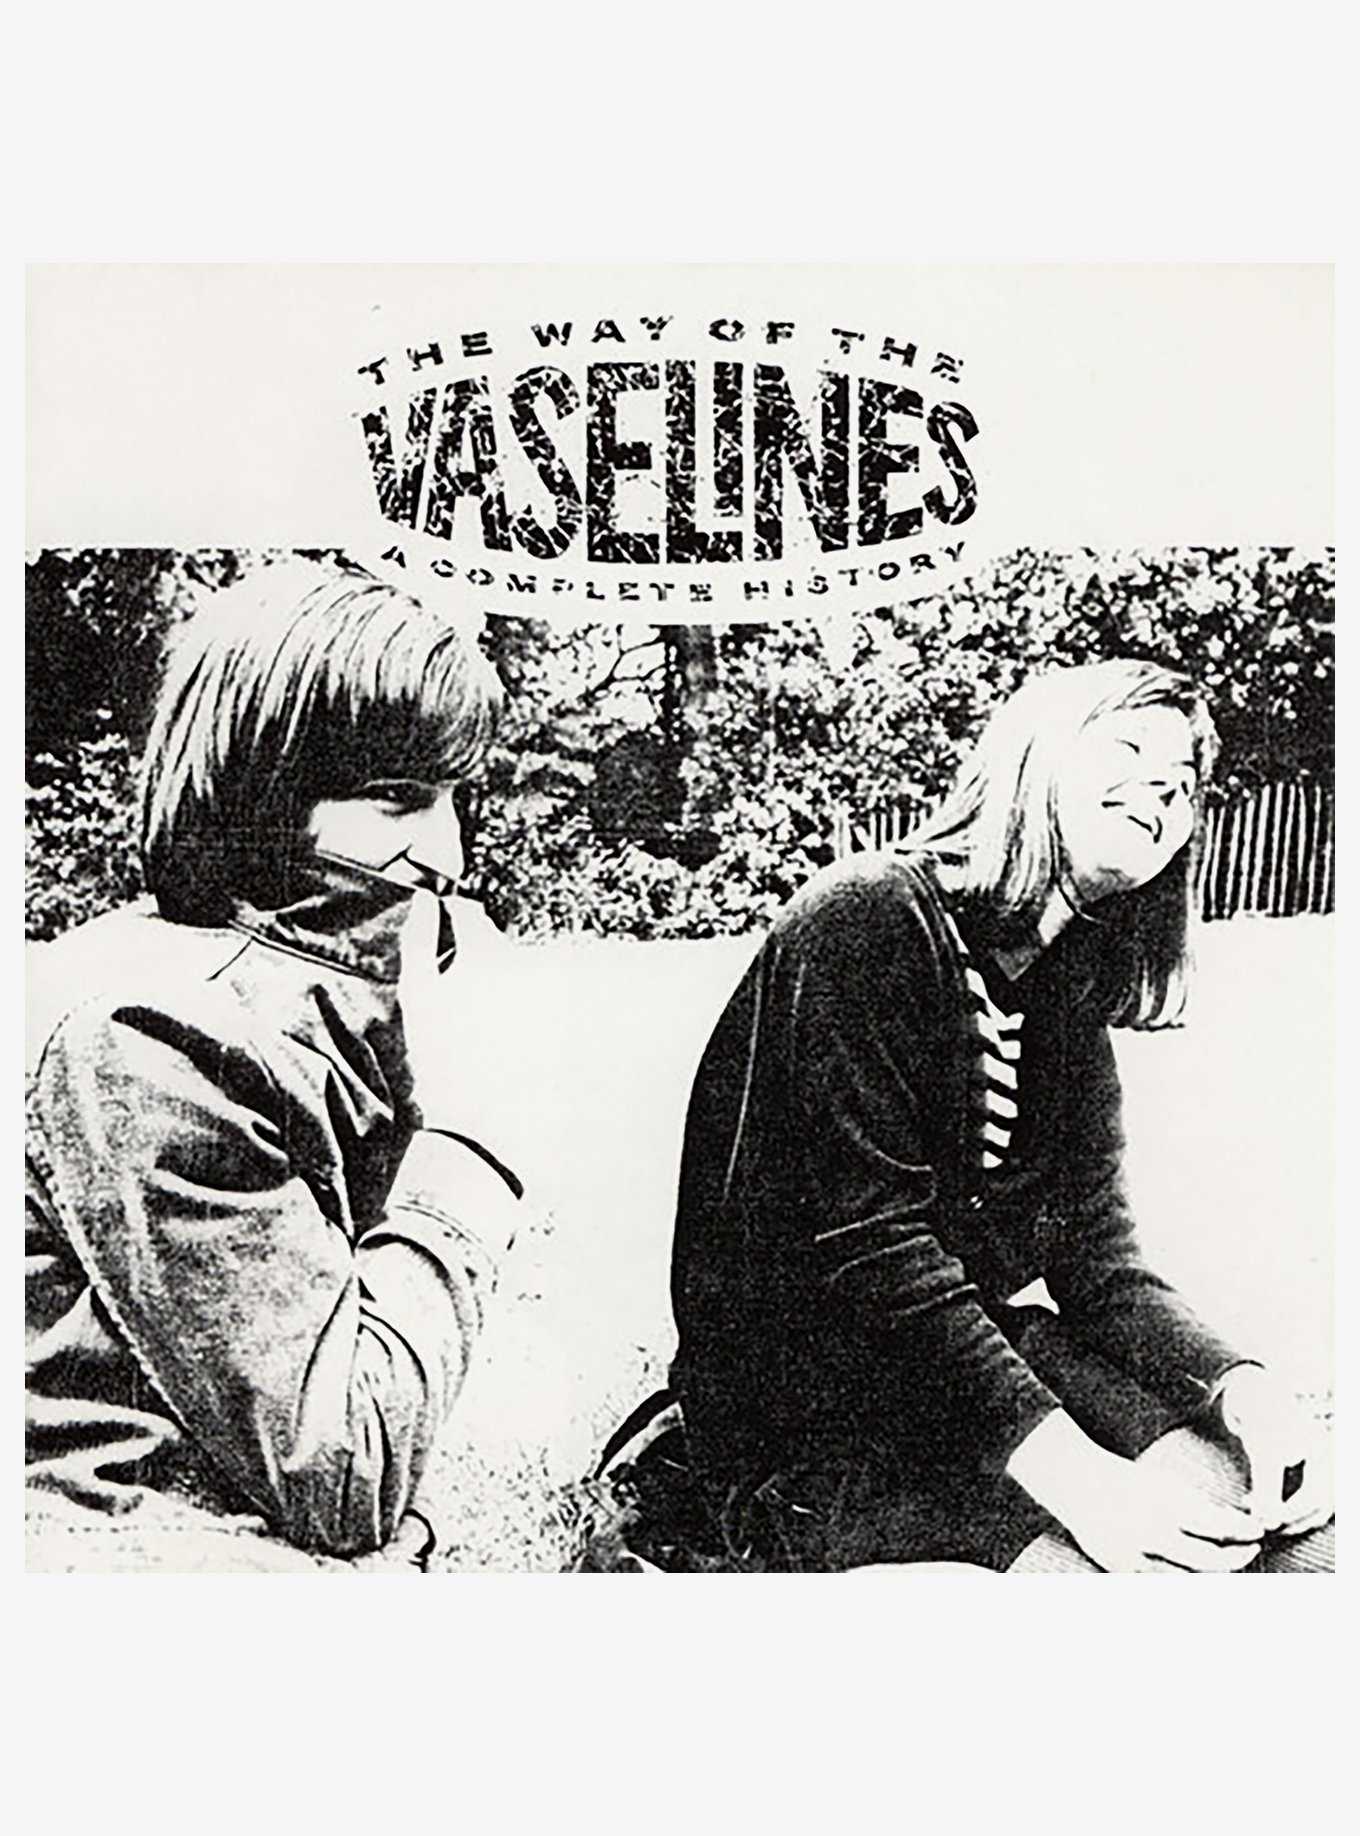 Vaselines Way Of The Vaselines Vinyl LP, , hi-res